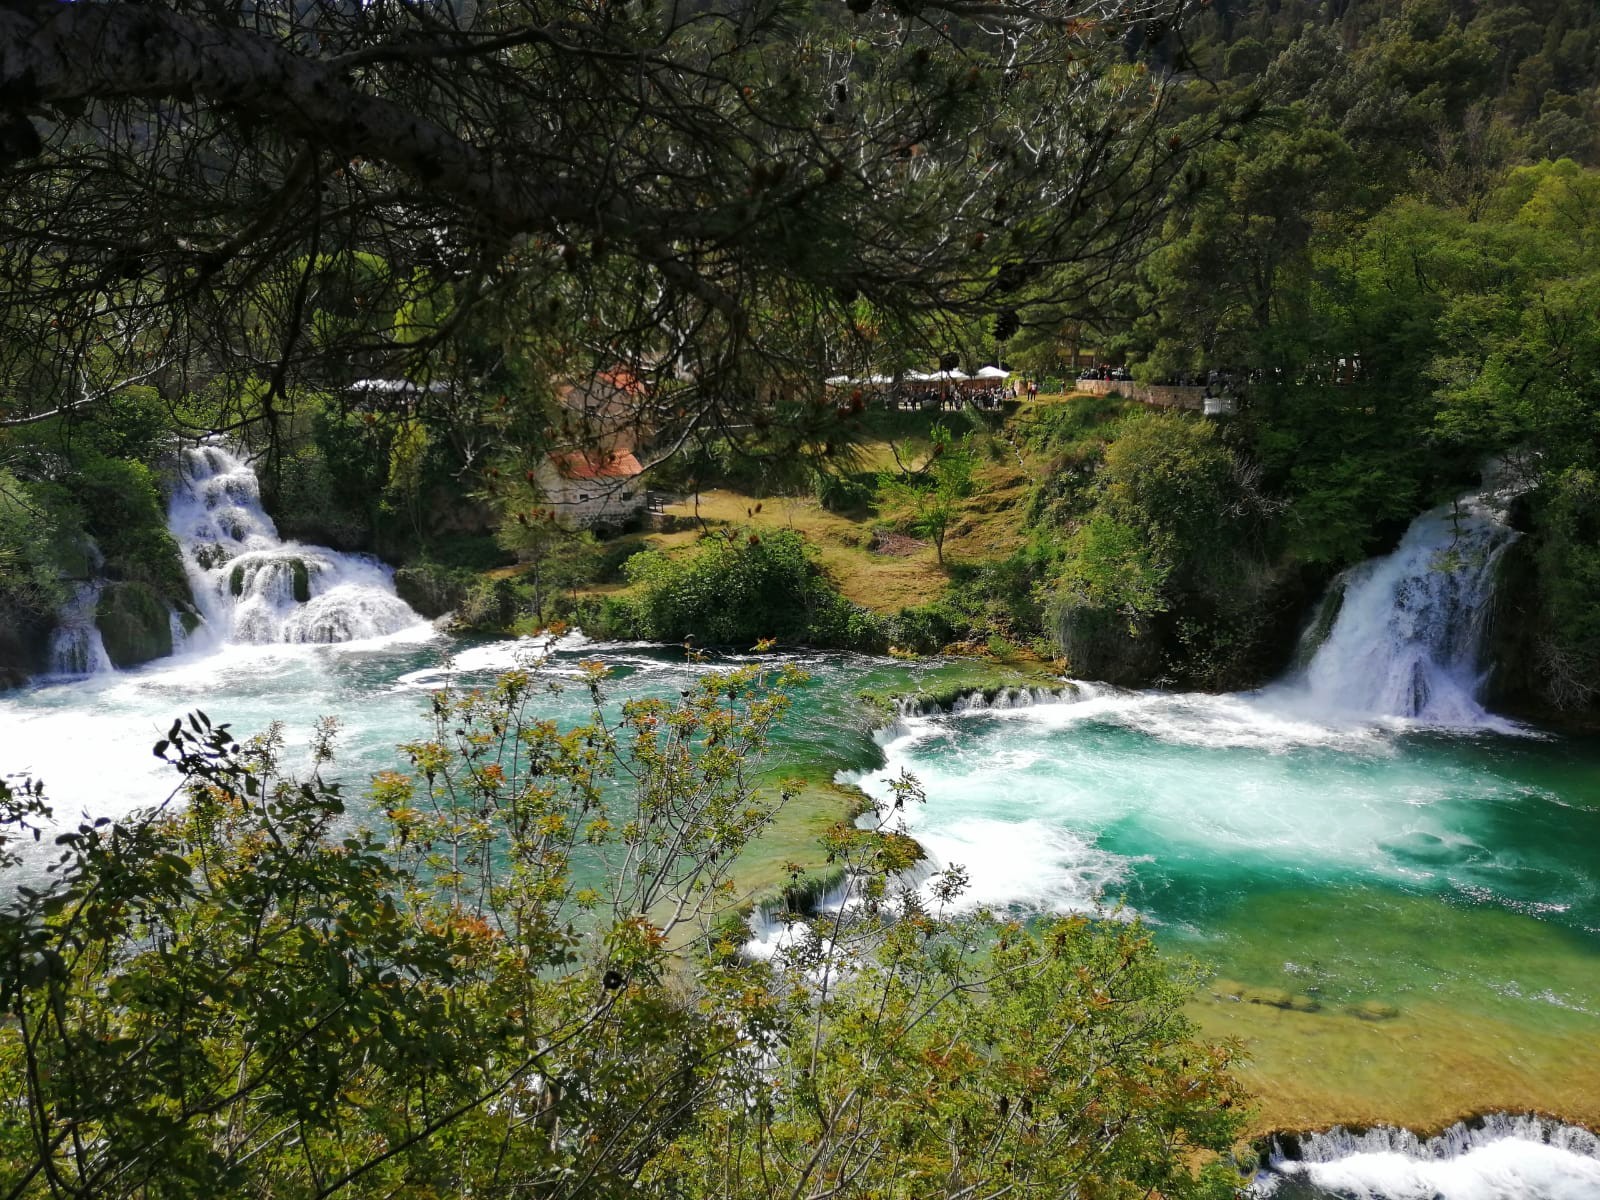 National park Krka waterfalls